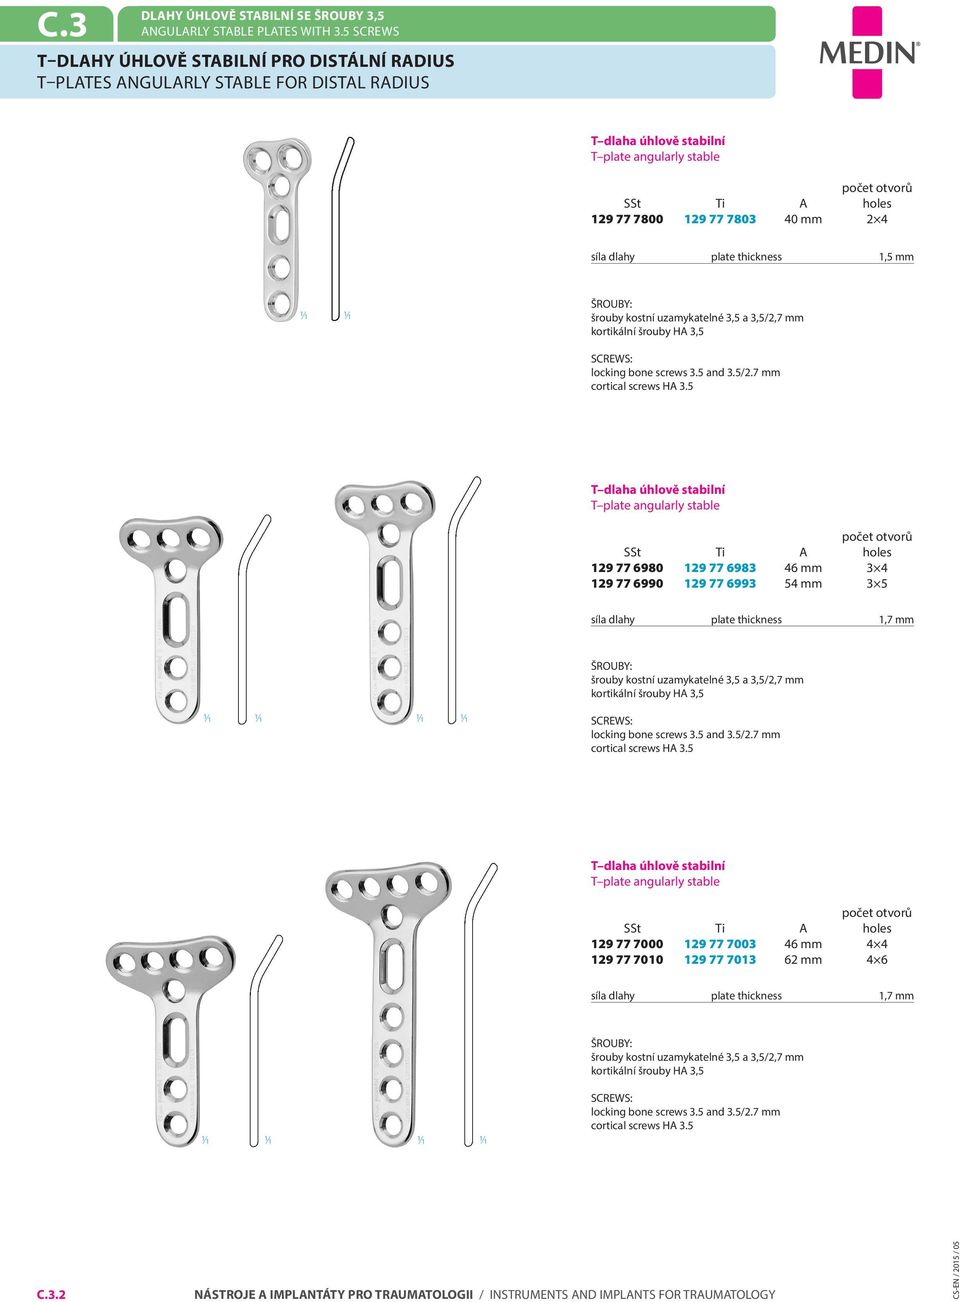 dlahy plate thickness 1,5 mm šrouby kostní uzamykatelné 3,5 a 3,5/2,7 mm kortikální šrouby H 3,5 locking bone screws 3.5 and 3.5/2.7 mm cortical screws H 3.